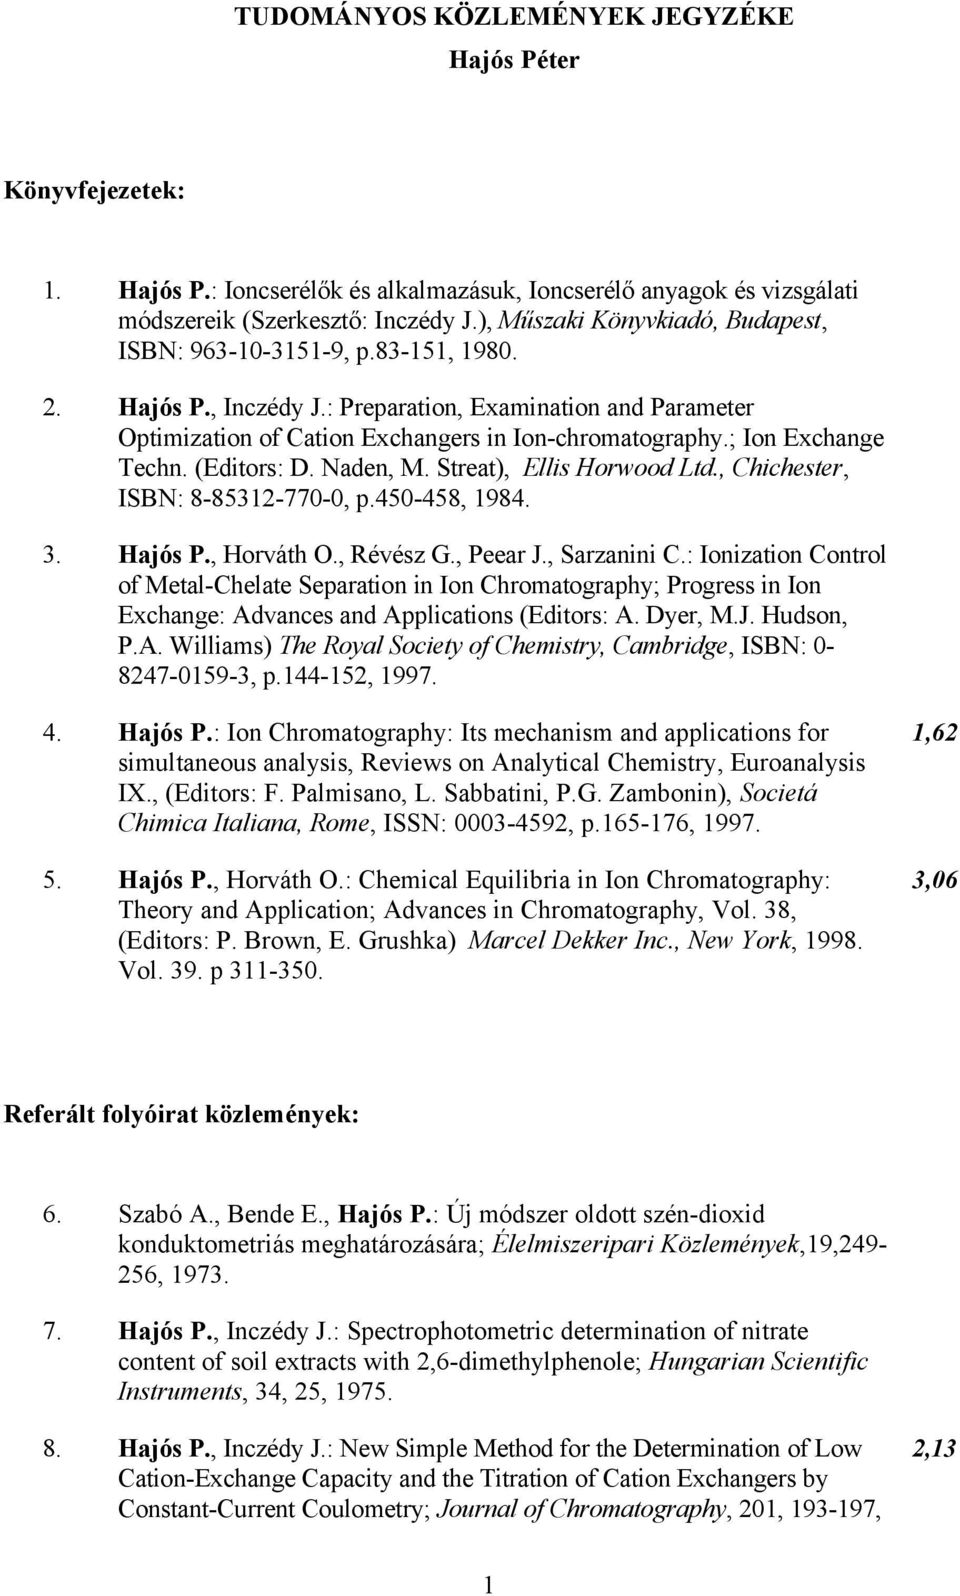 ; Ion Exchange Techn. (Editors: D. Naden, M. Streat), Ellis Horwood Ltd., Chichester, ISBN: 8-85312-770-0, p.450-458, 1984. 3. Hajós P., Horváth O., Révész G., Peear J., Sarzanini C.